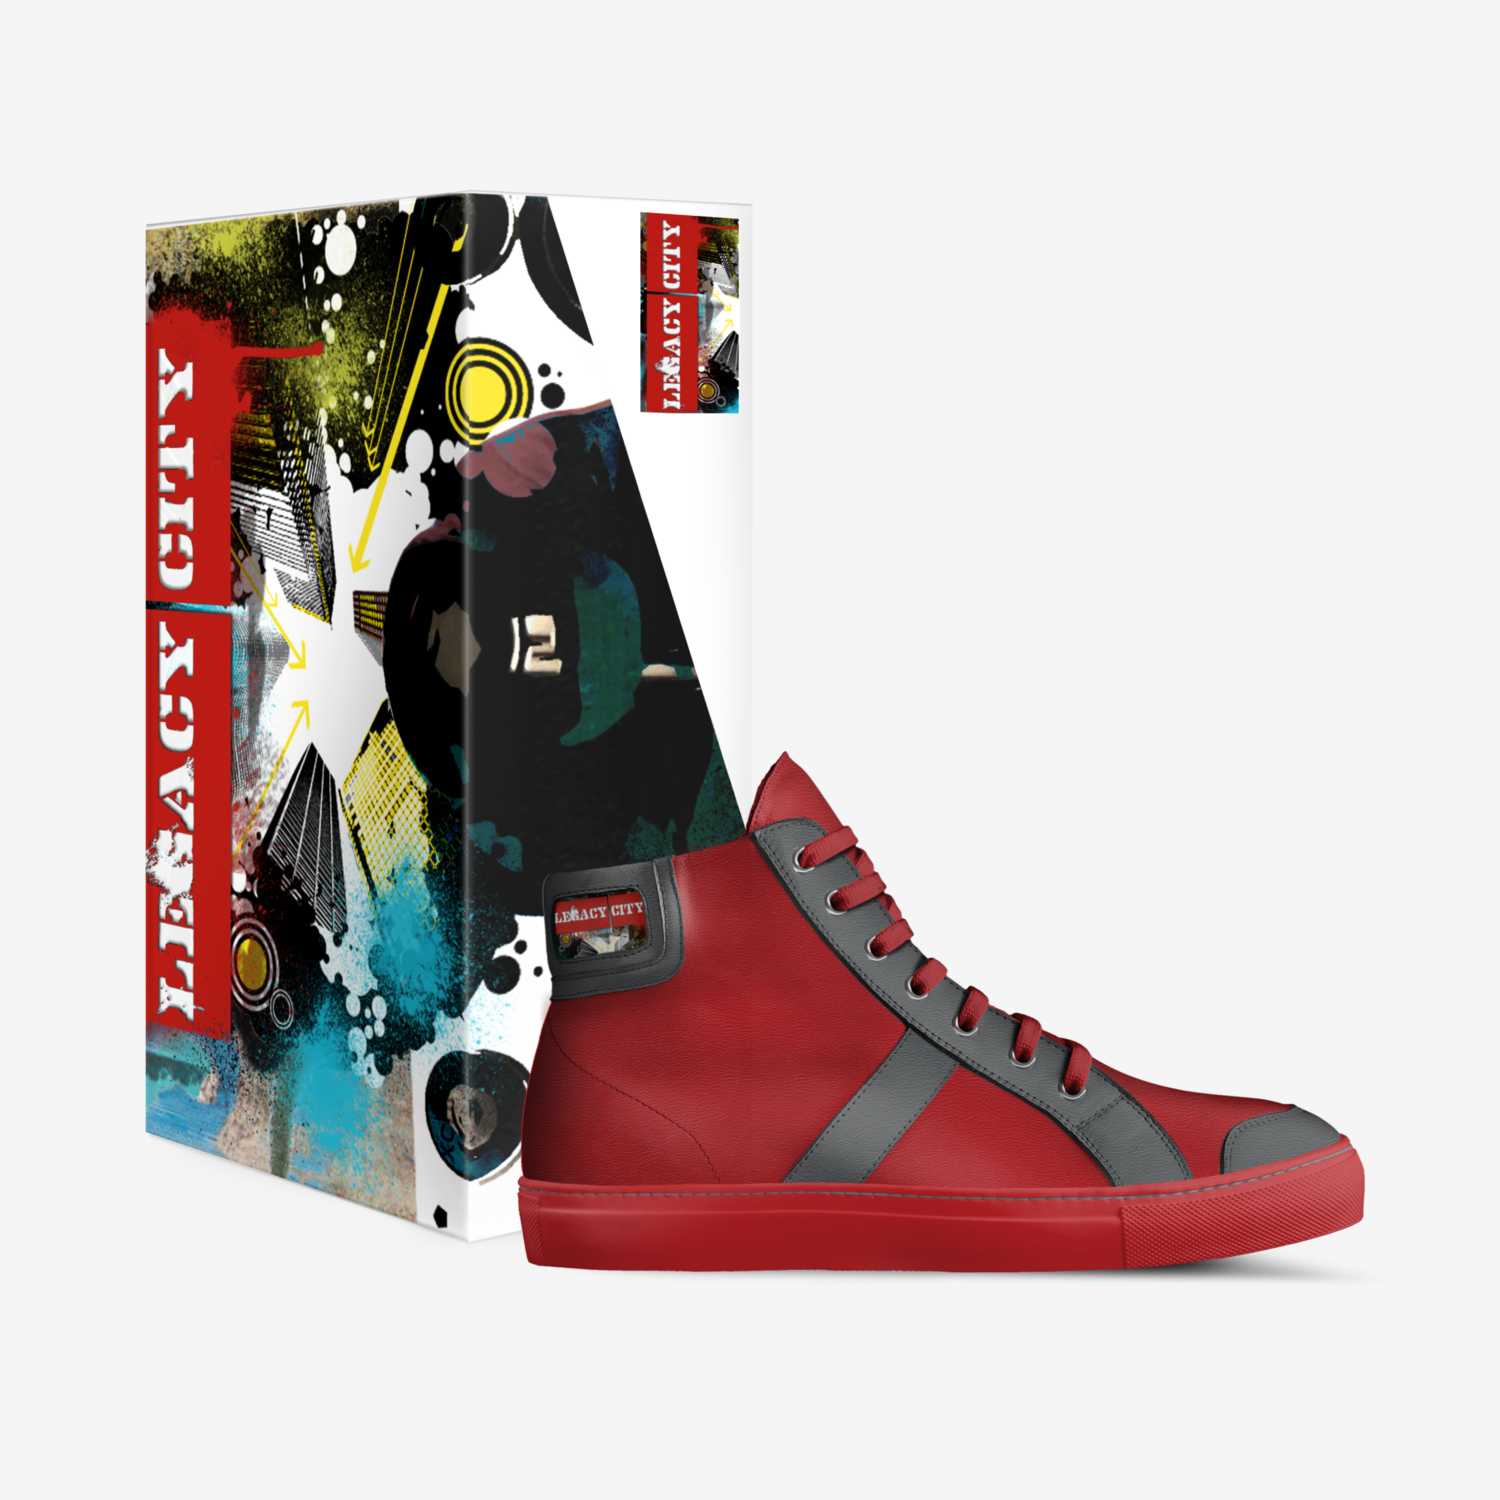 LegacyCity custom made in Italy shoes by Cedric.bellamy84 Bellamy | Box view